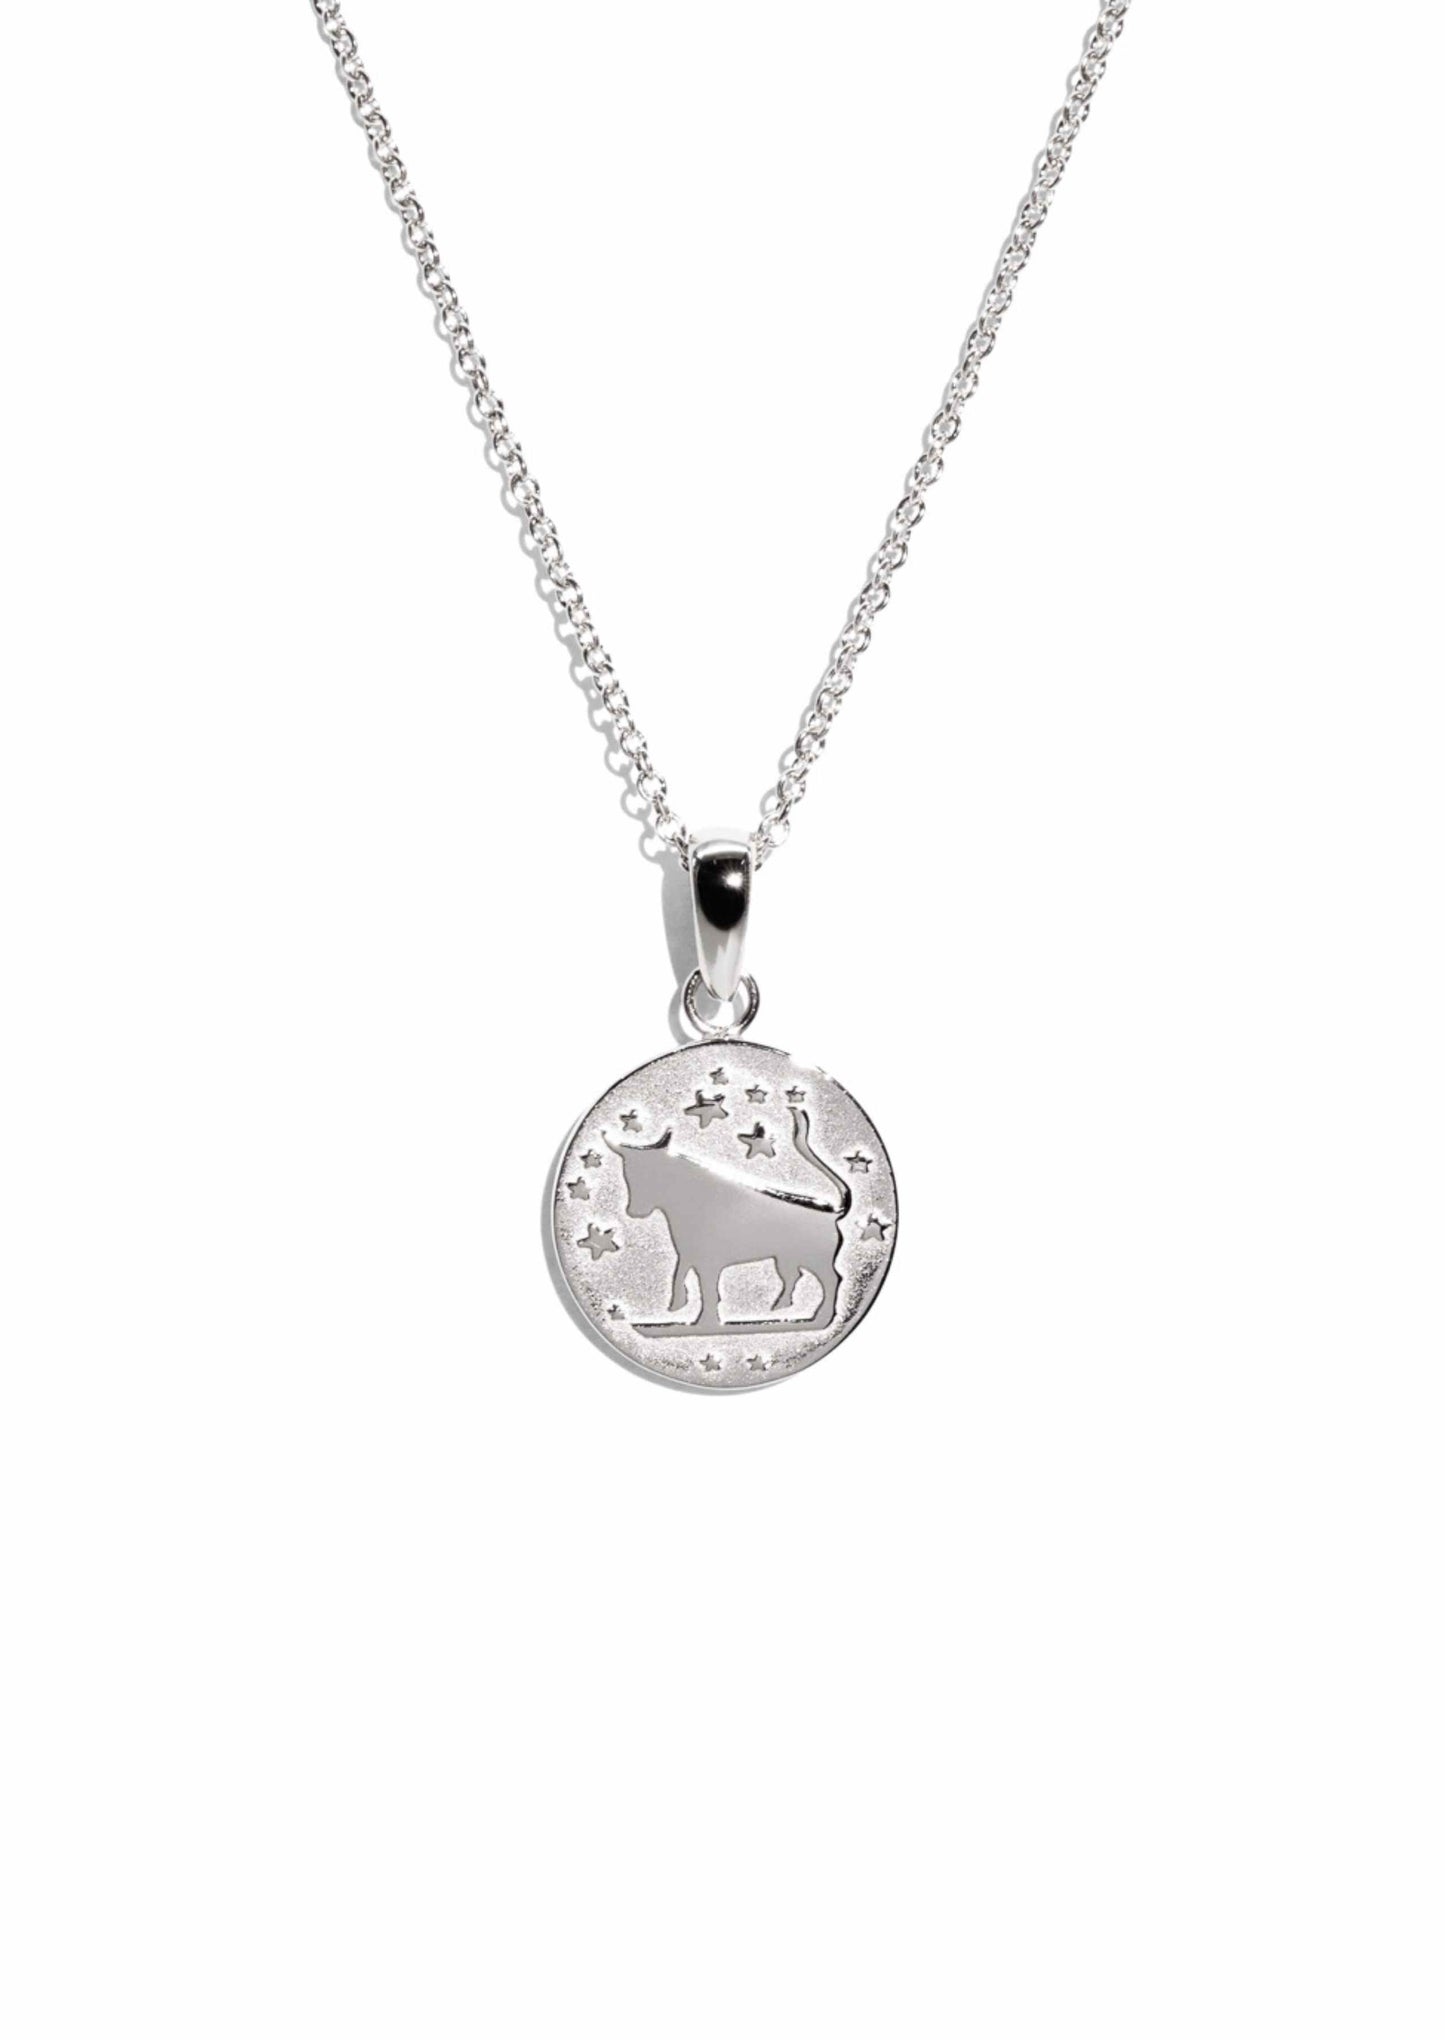 The Silver Taurus Zodiac Necklace